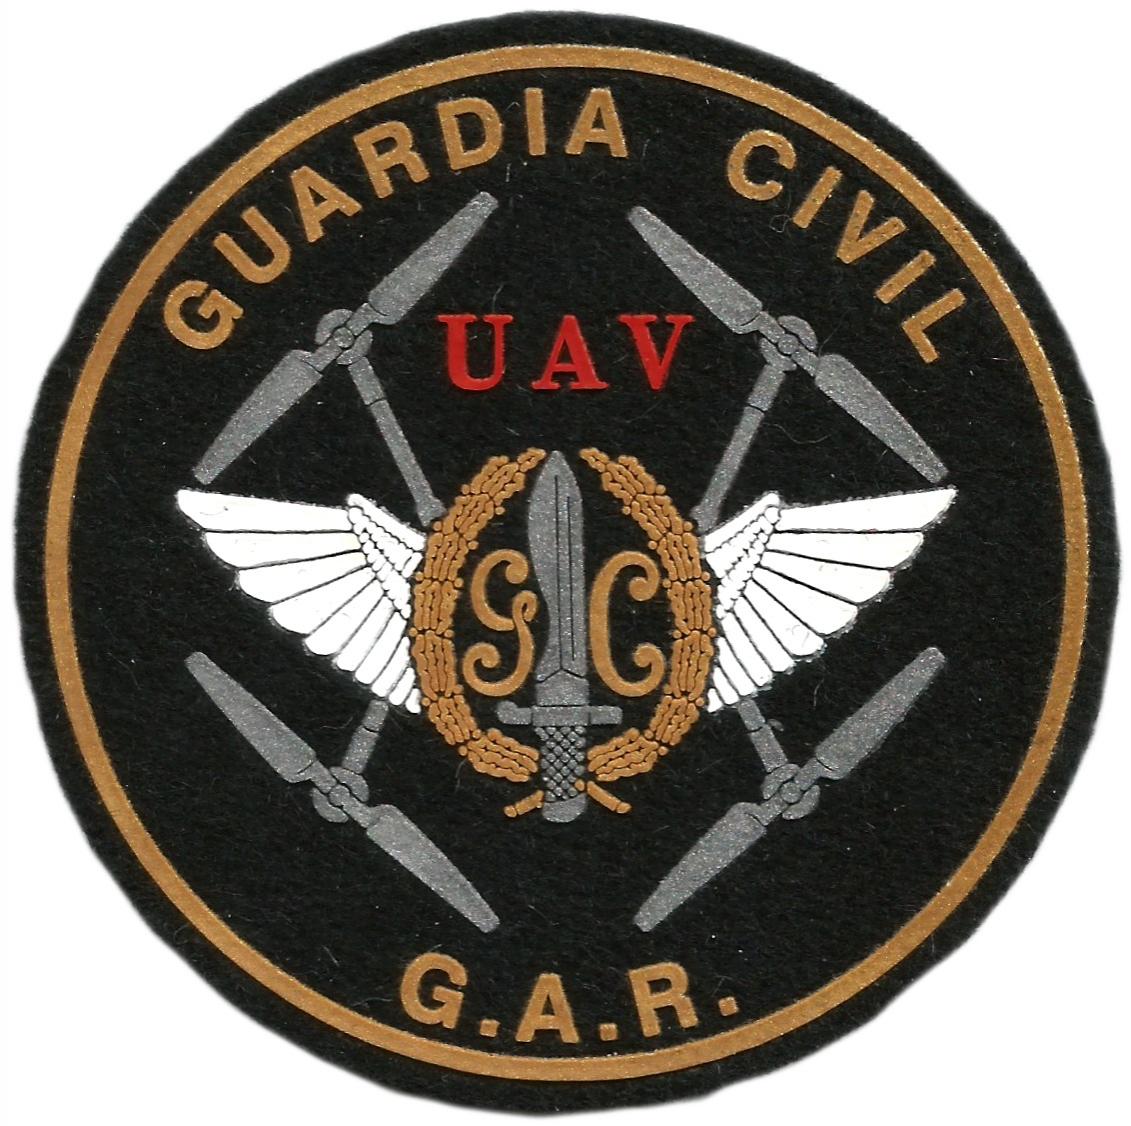 Guardia civil UAV unidad aérea de vigilancia drones GAR parche insignia emblema distintivo